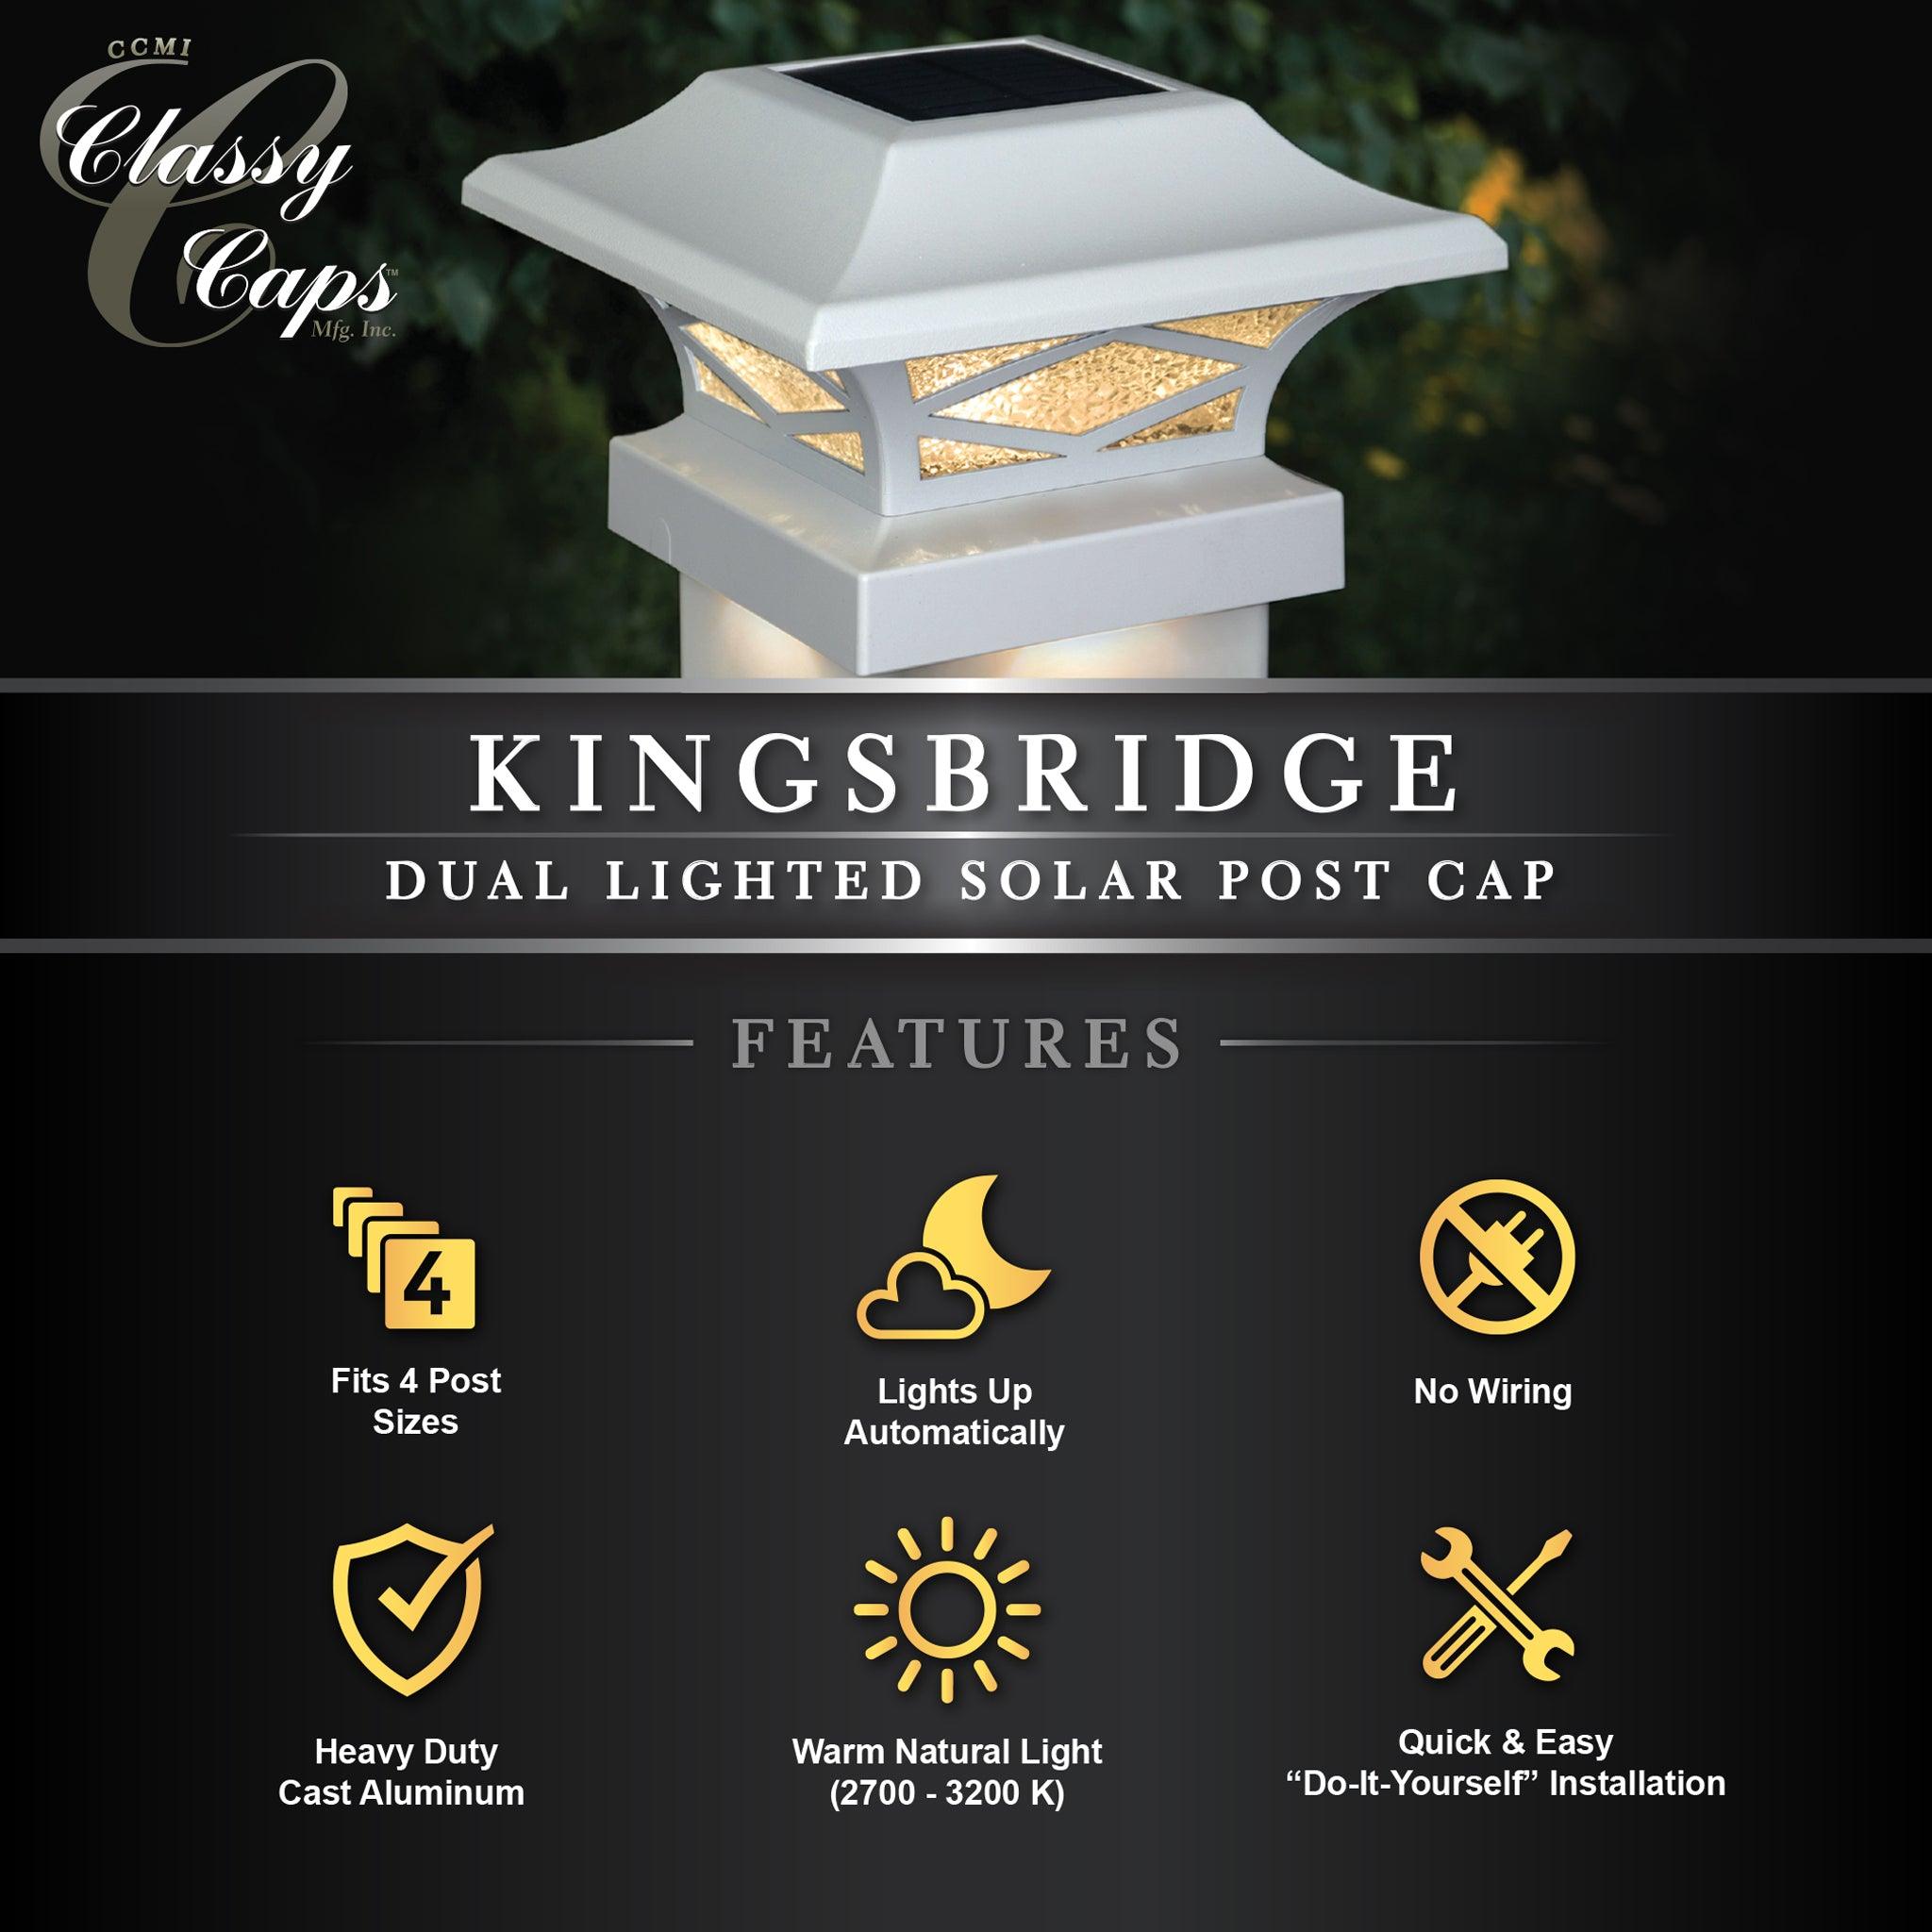 Kingsbridge Dual Lighted Solar Post Cap - White - Classy Caps Mfg. Inc.